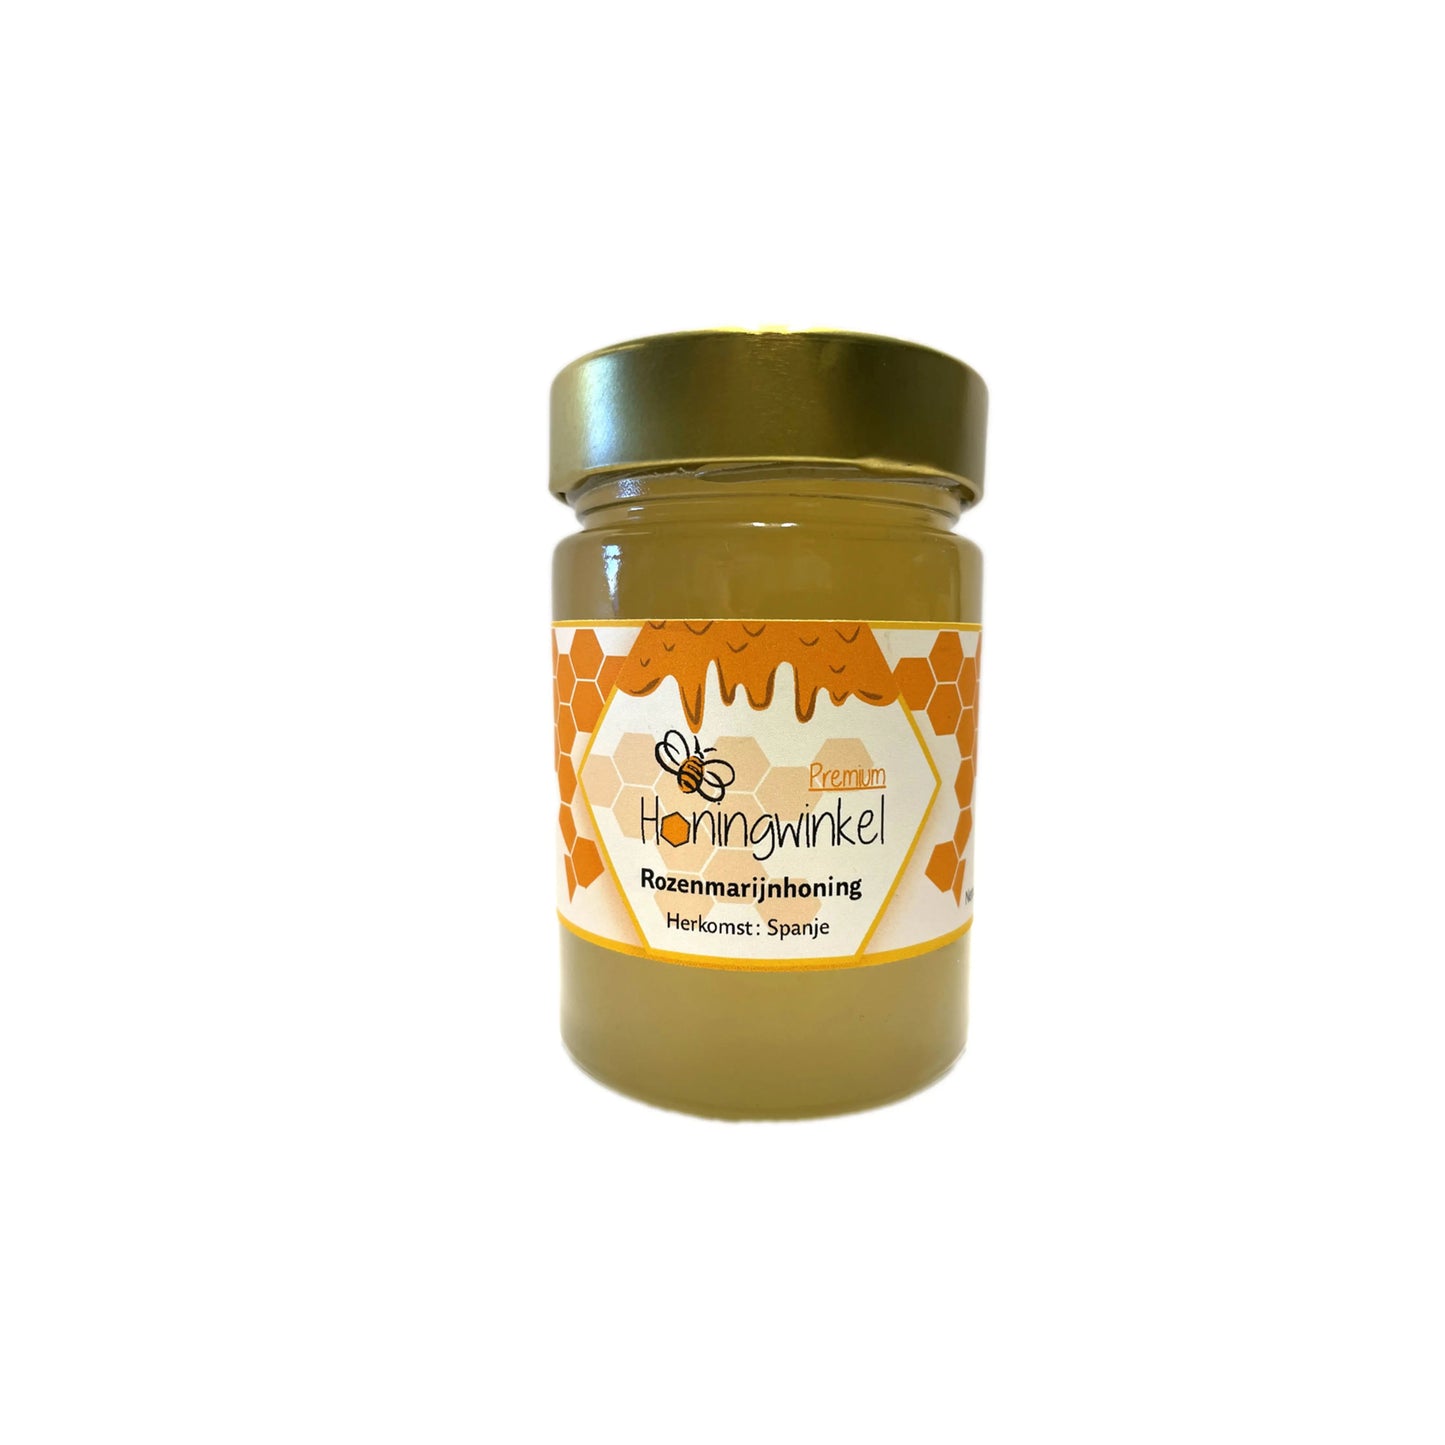 Premium rozemarijnhoning Spanje 450g Honingwinkel (vloeibaar) - Honingwinkel